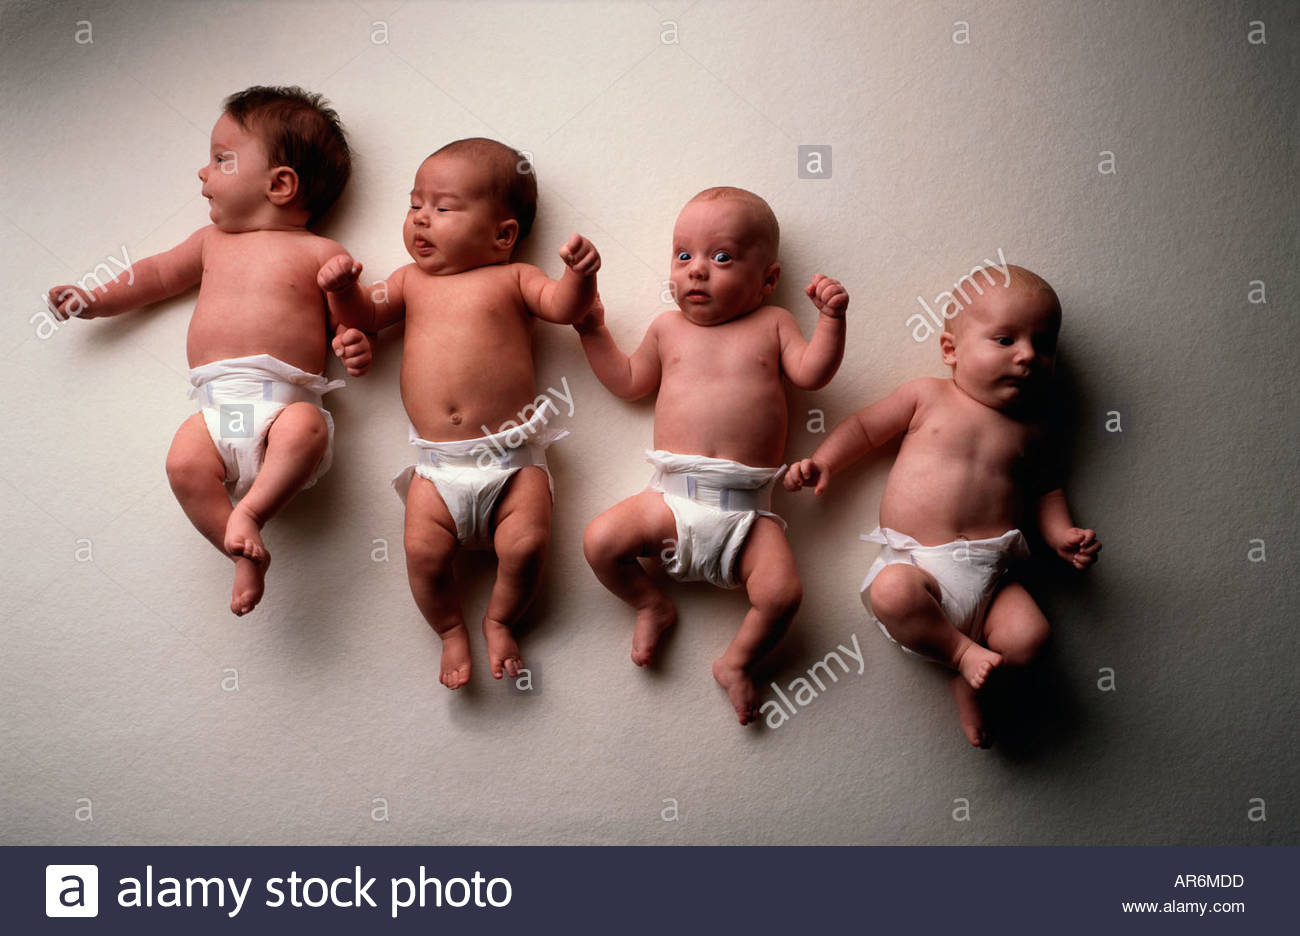 4-babies-brother-infants-nappy-newborn-q